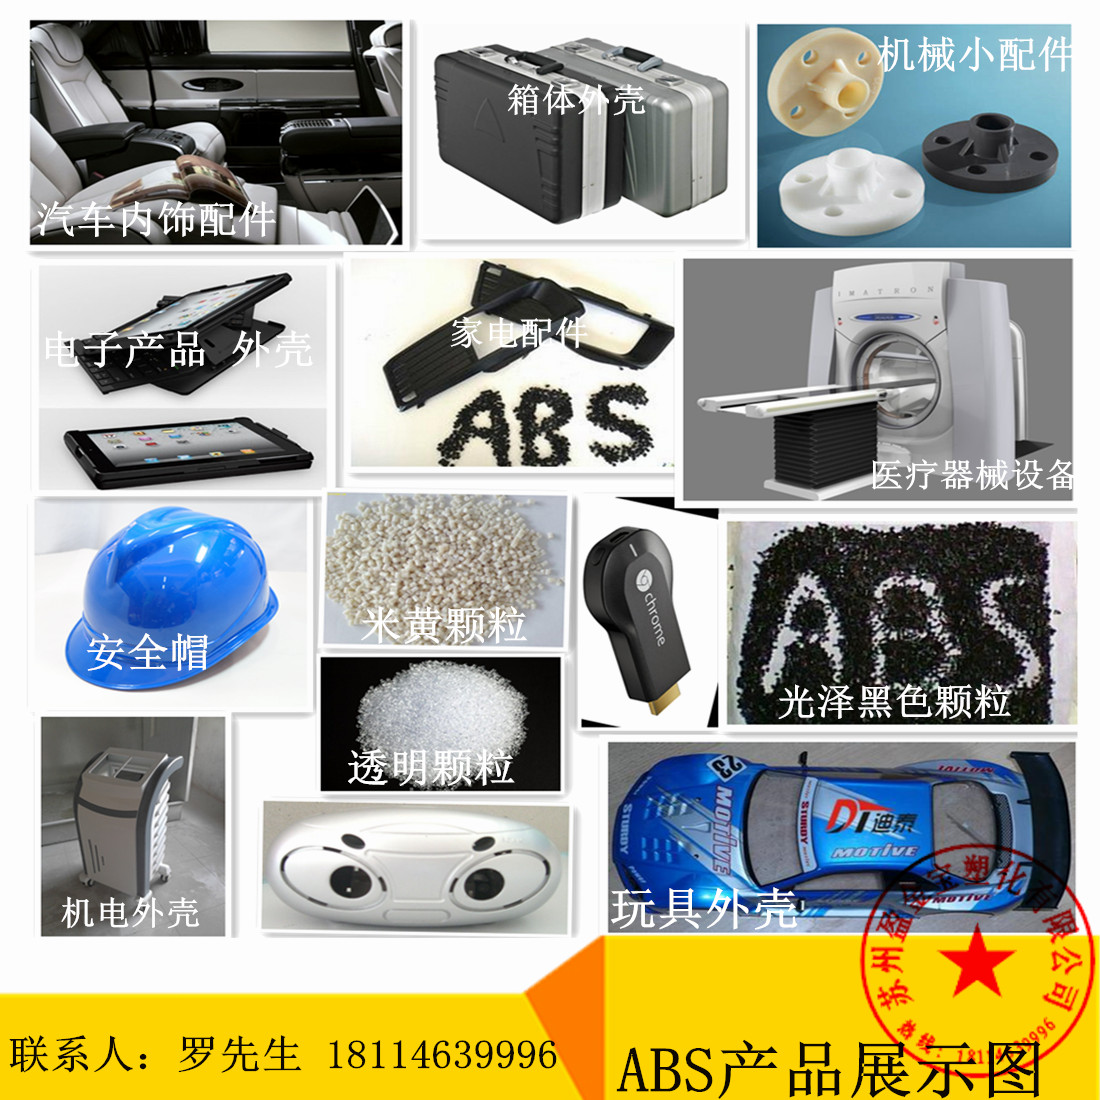 ABS PA-757 台湾奇美 高刚性 高光泽 家电电器外壳 汽车部件